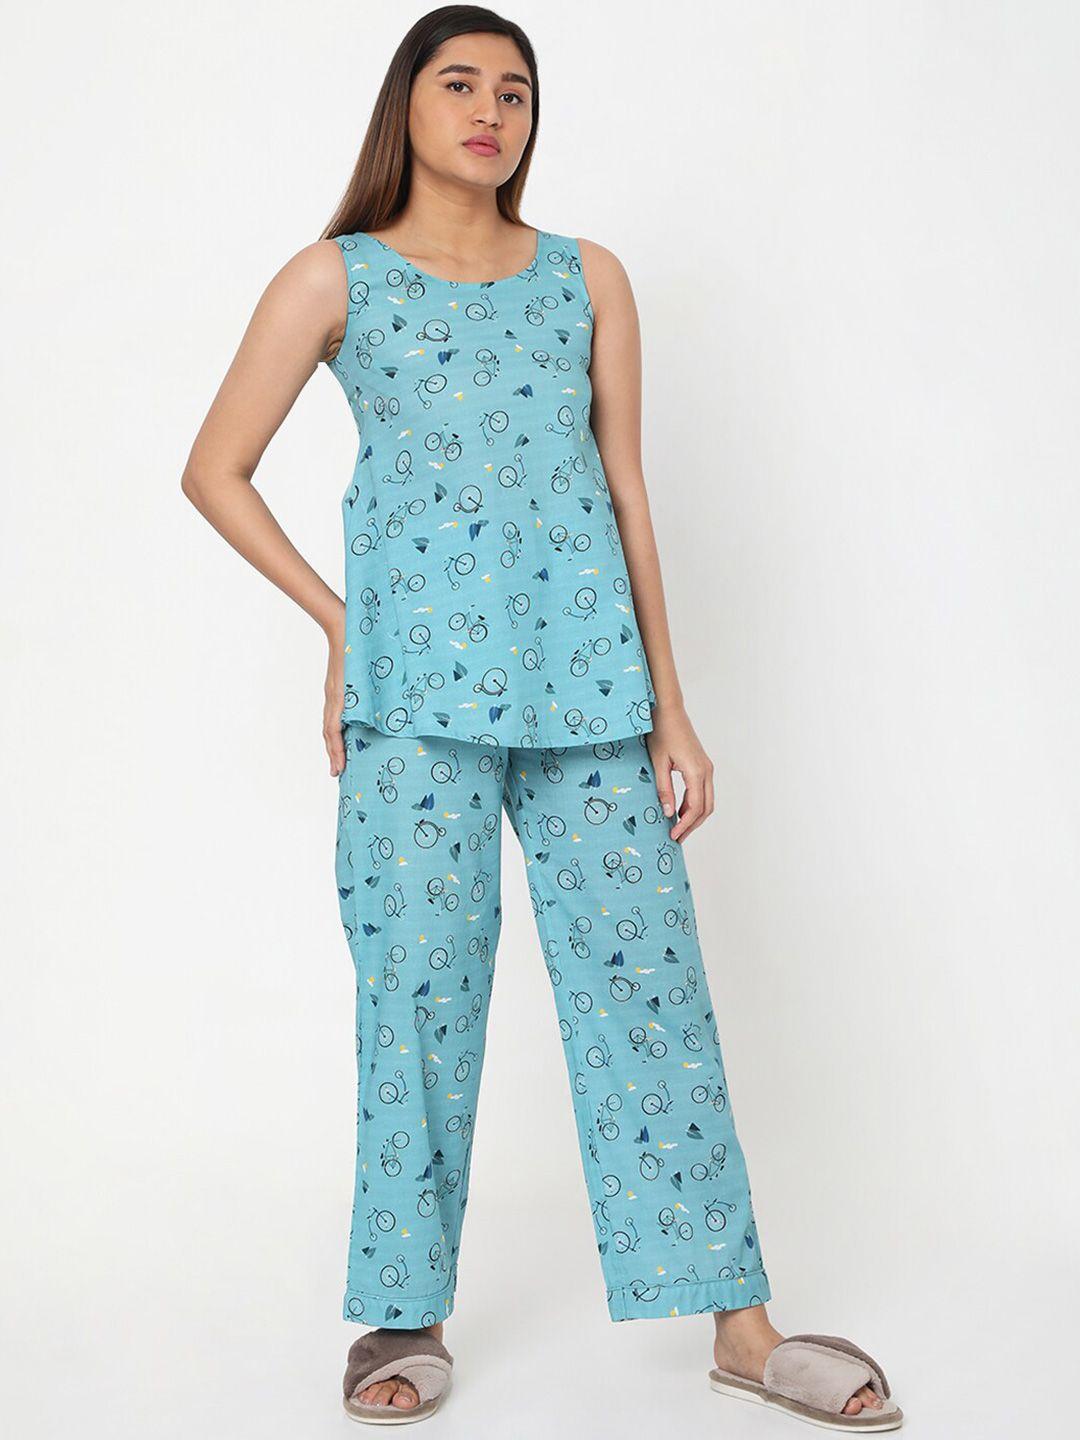 ashtag printed pure cotton top and pyjamas night suit